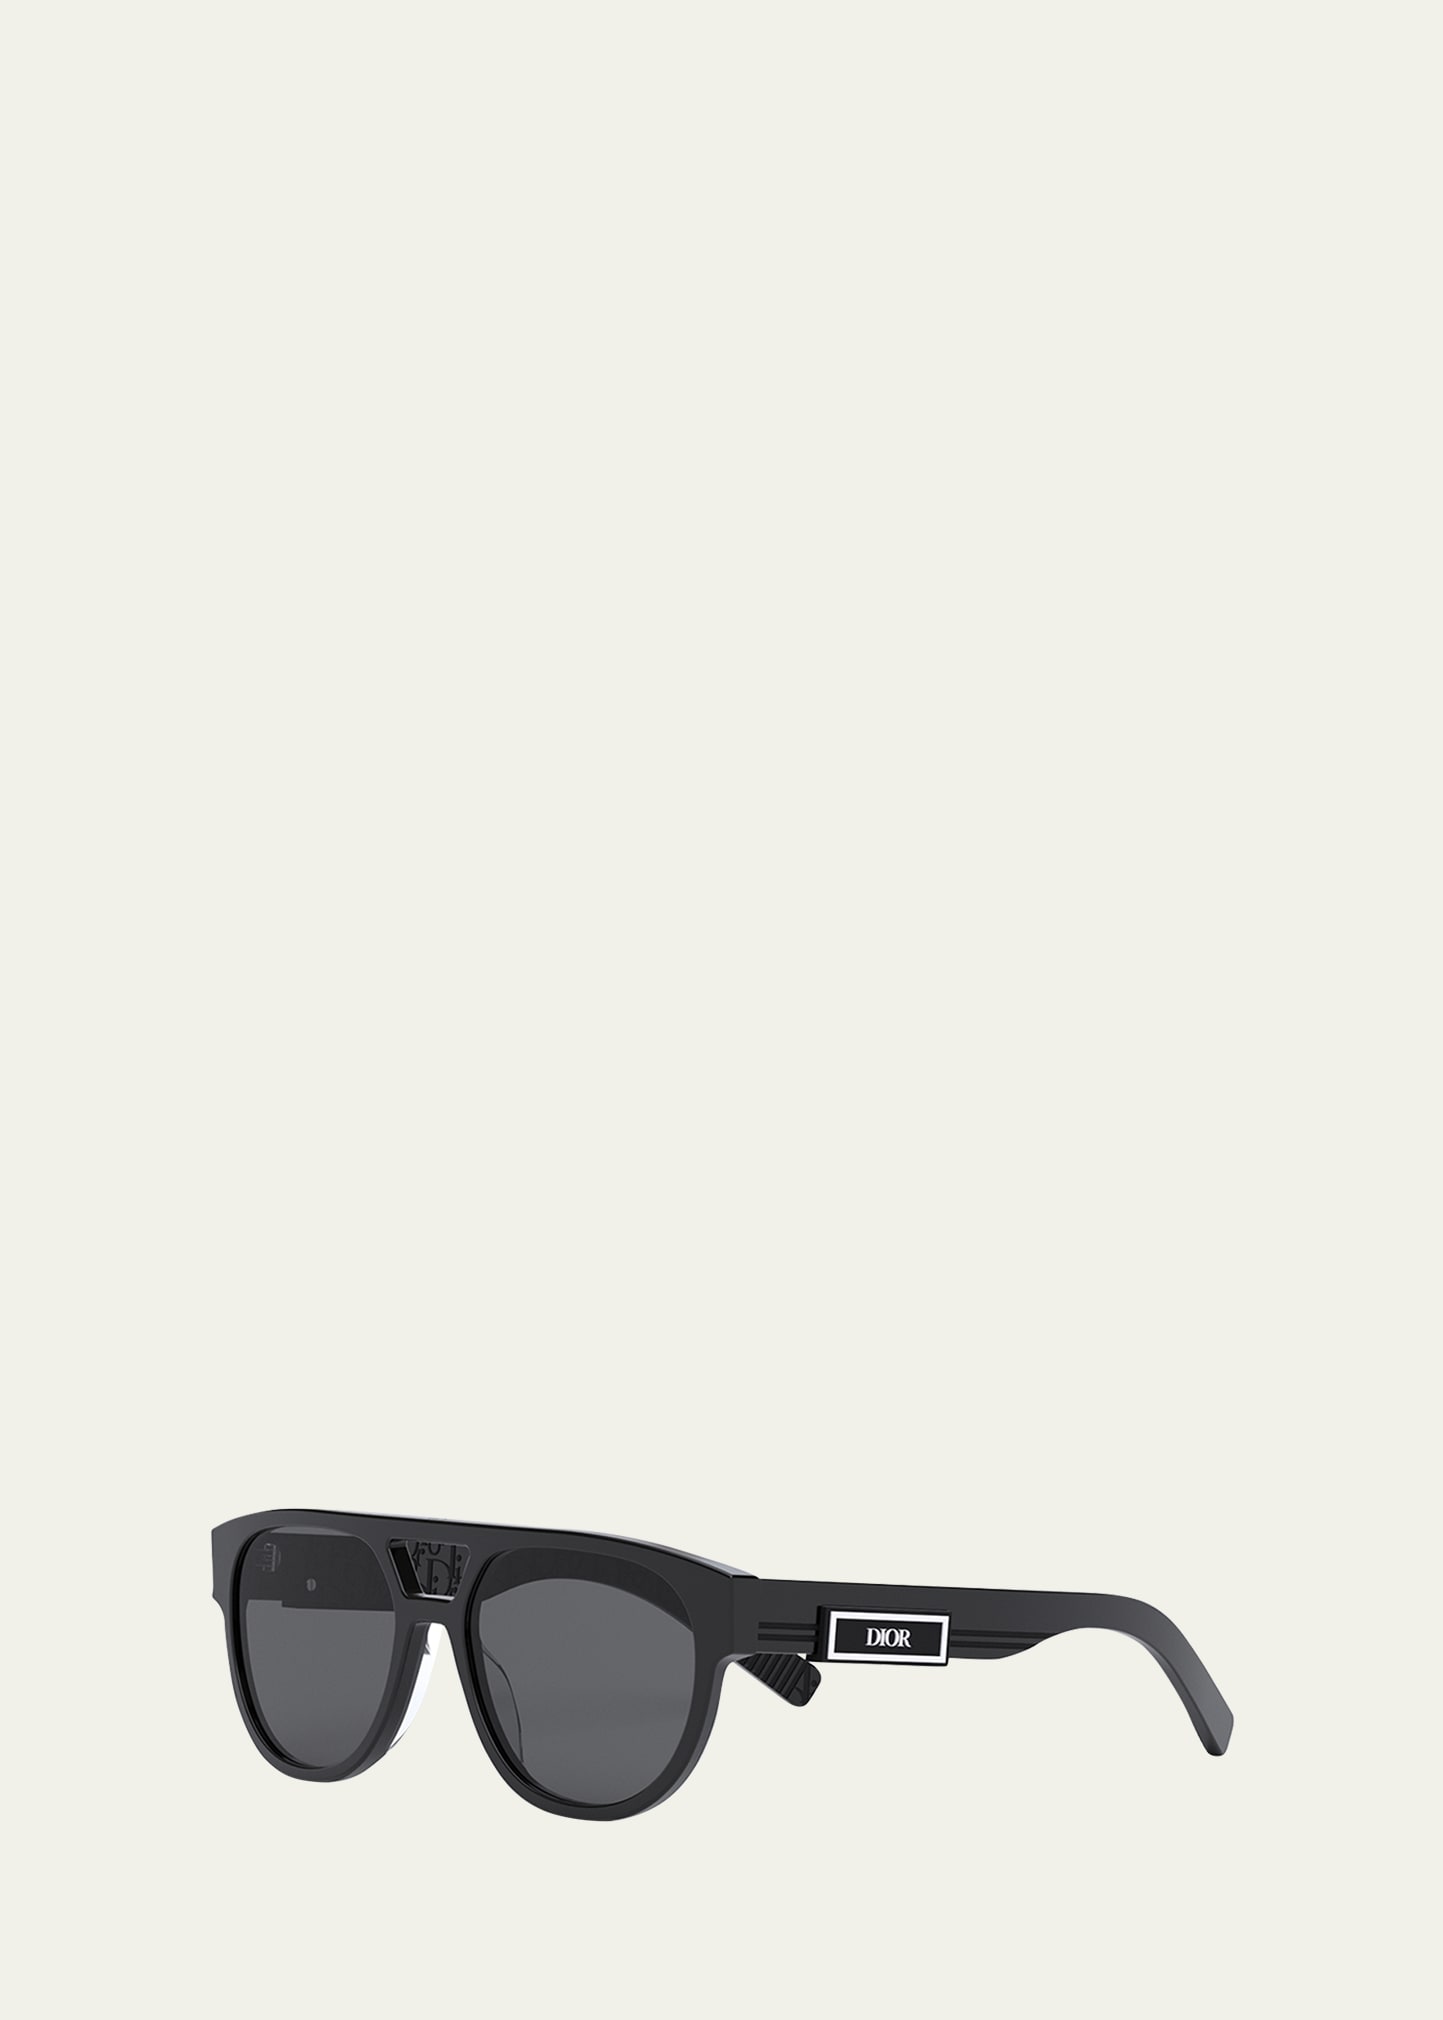 DIOR EYEWEAR DiorB23 R1I Aviator-Style Acetate Mirrored Sunglasses for Men